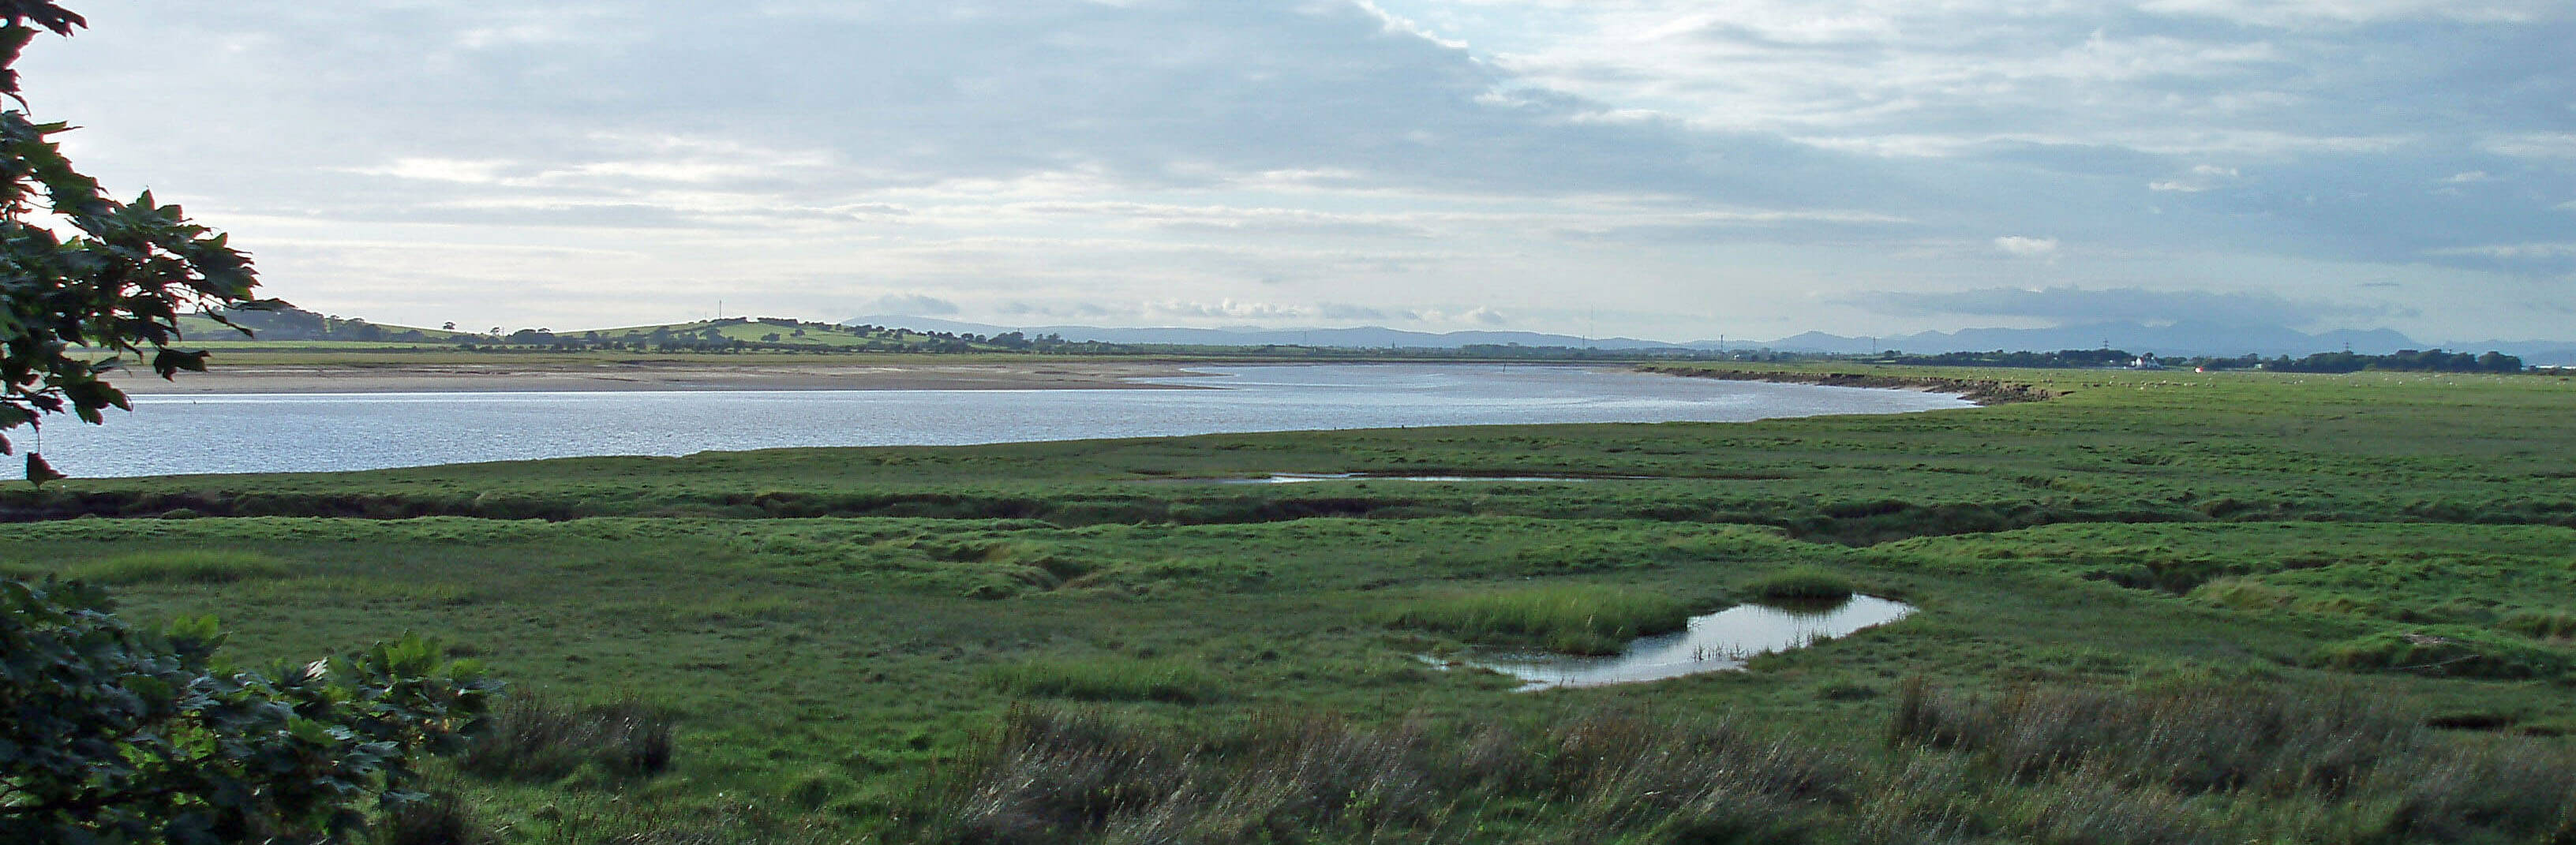 aldcliffe marsh